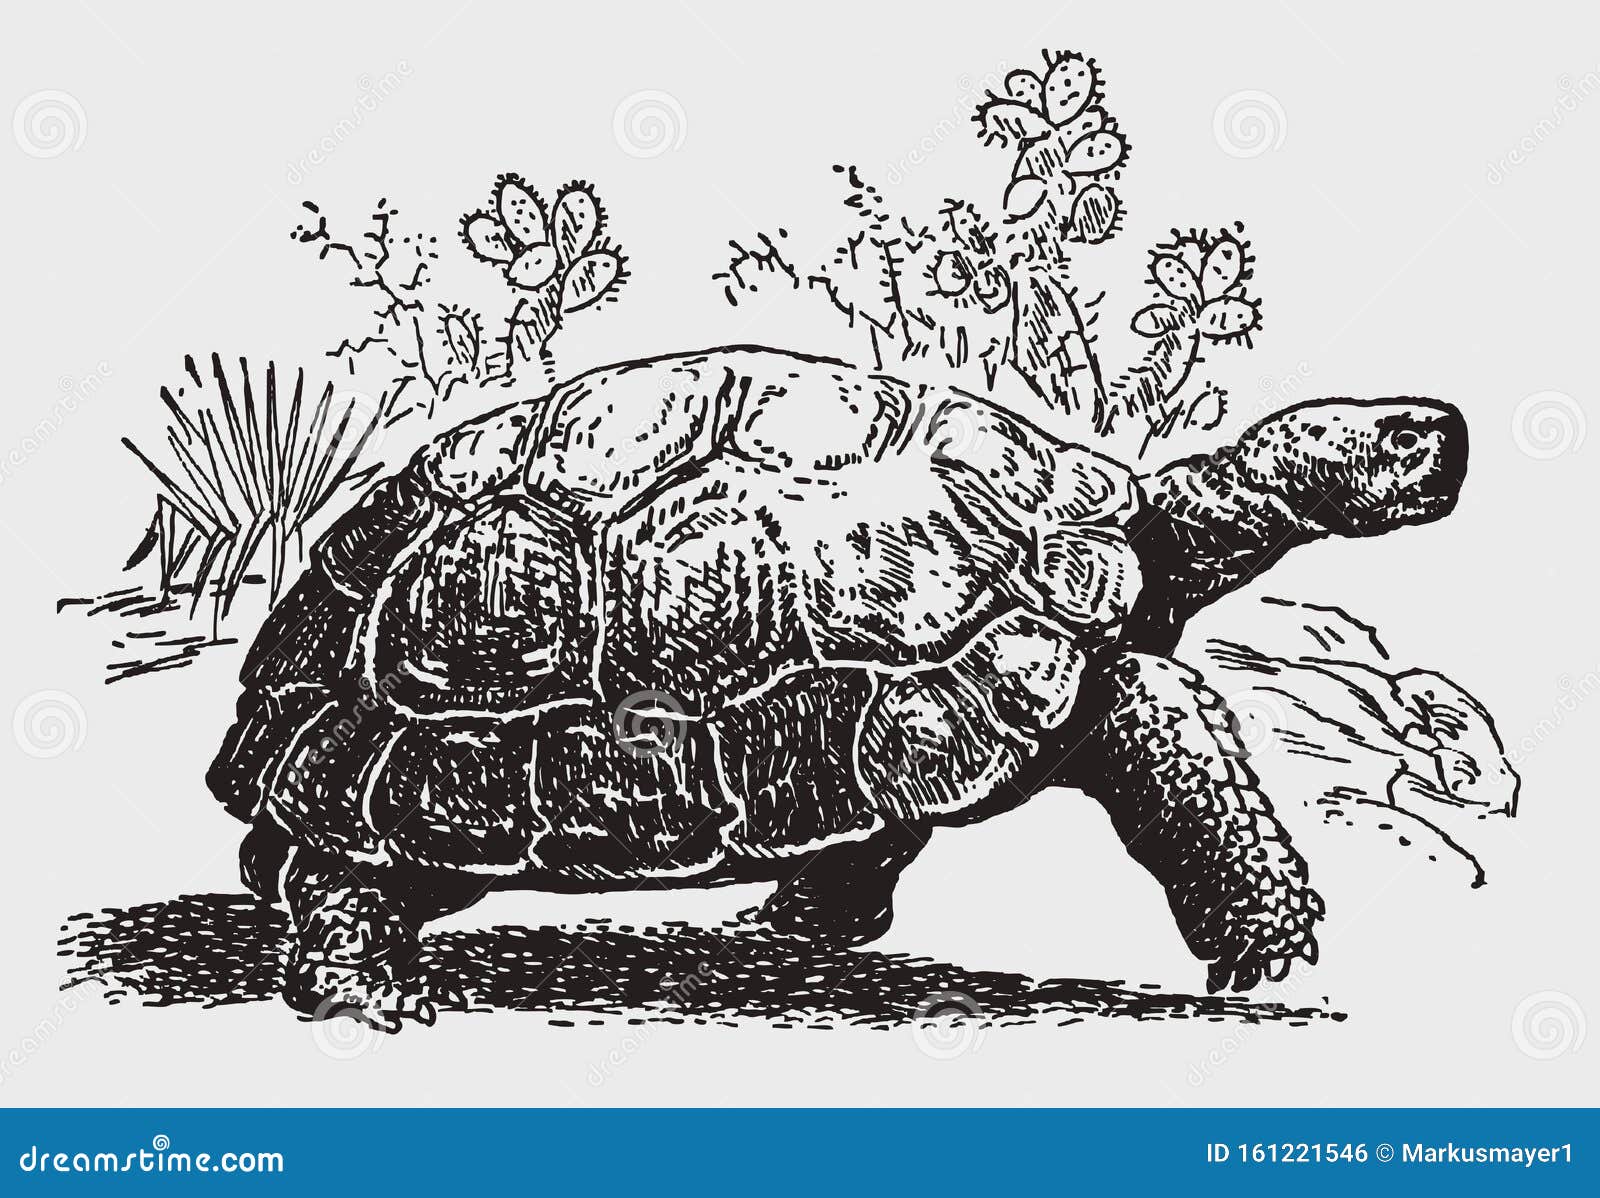 endangered galapagos giant tortoise, chelonoidis, walking in front of cactus plants